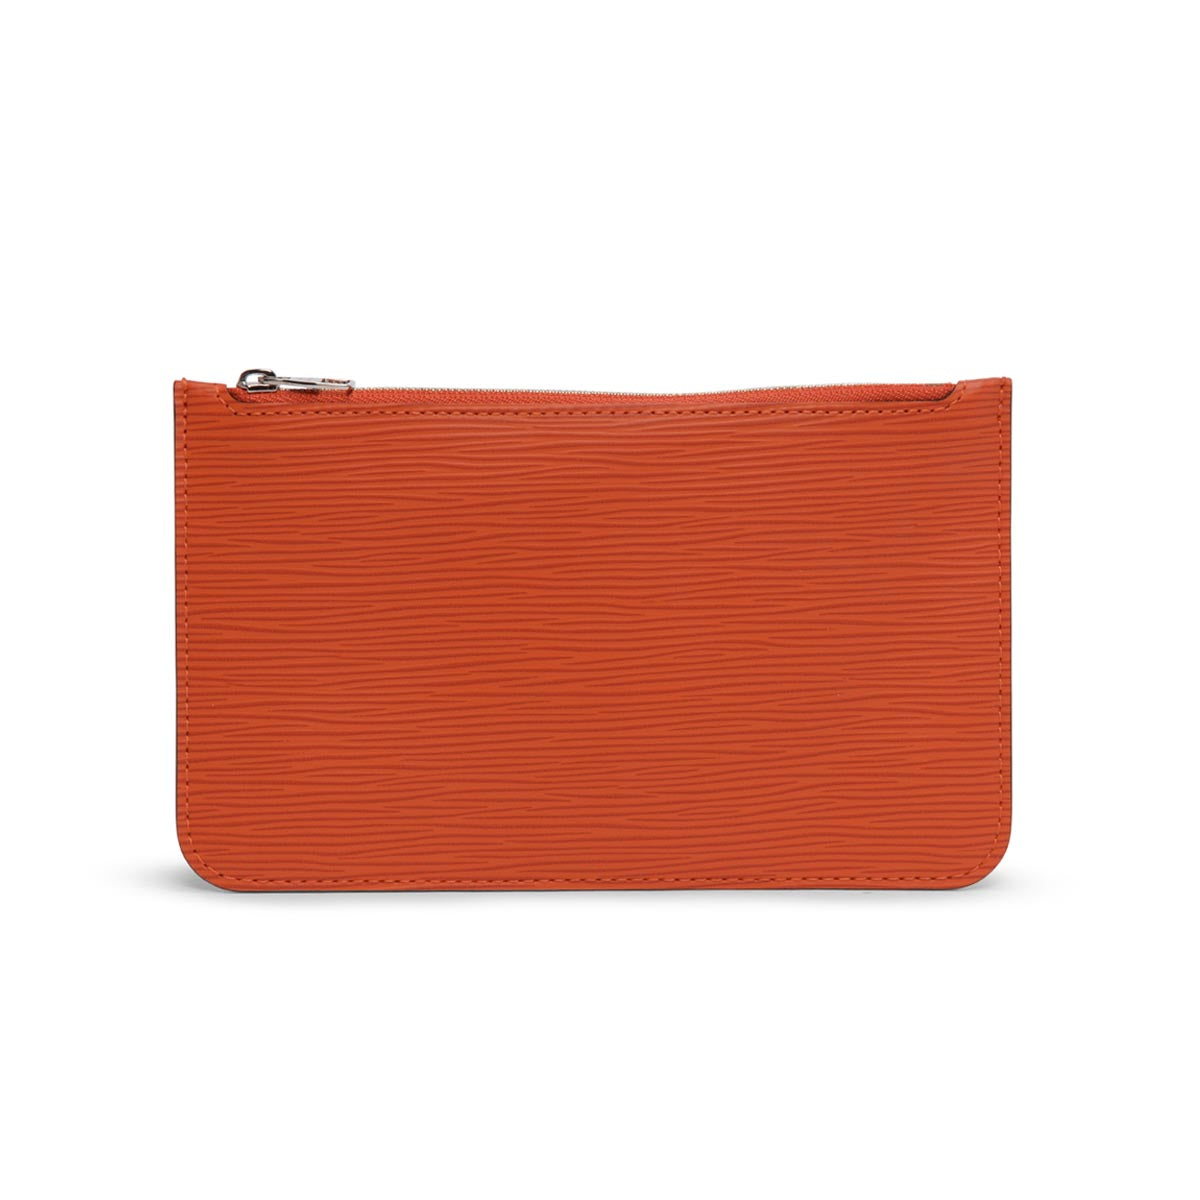 Louis Vuitton Orange Large Wallet in Epi Leather